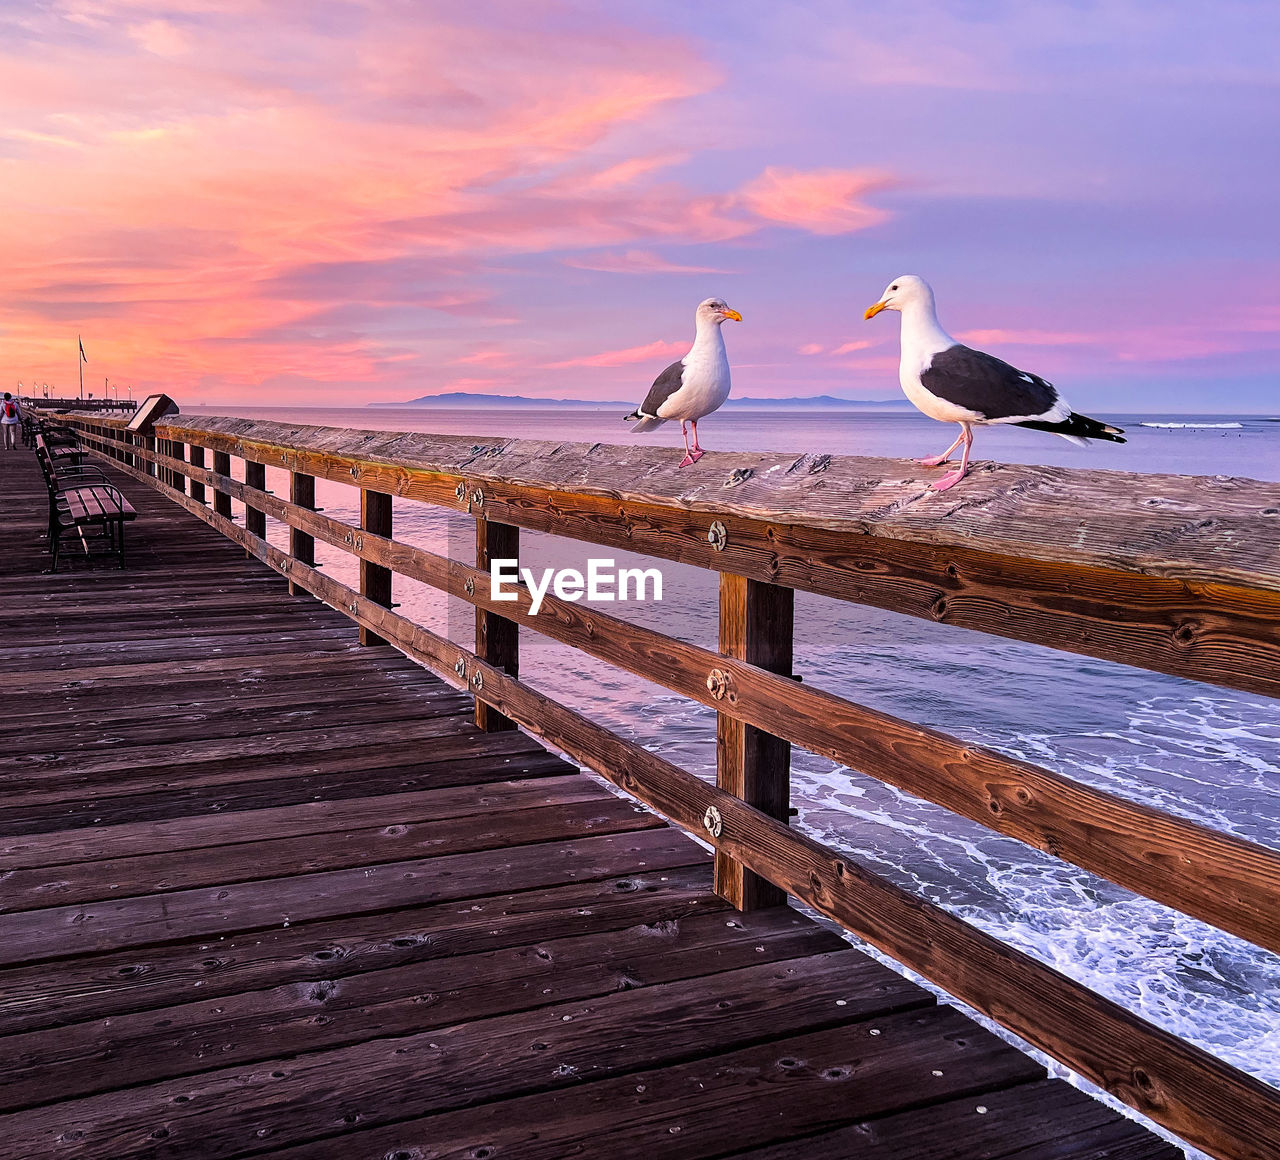 Seagulls at sunrise on the ventura beach pier 